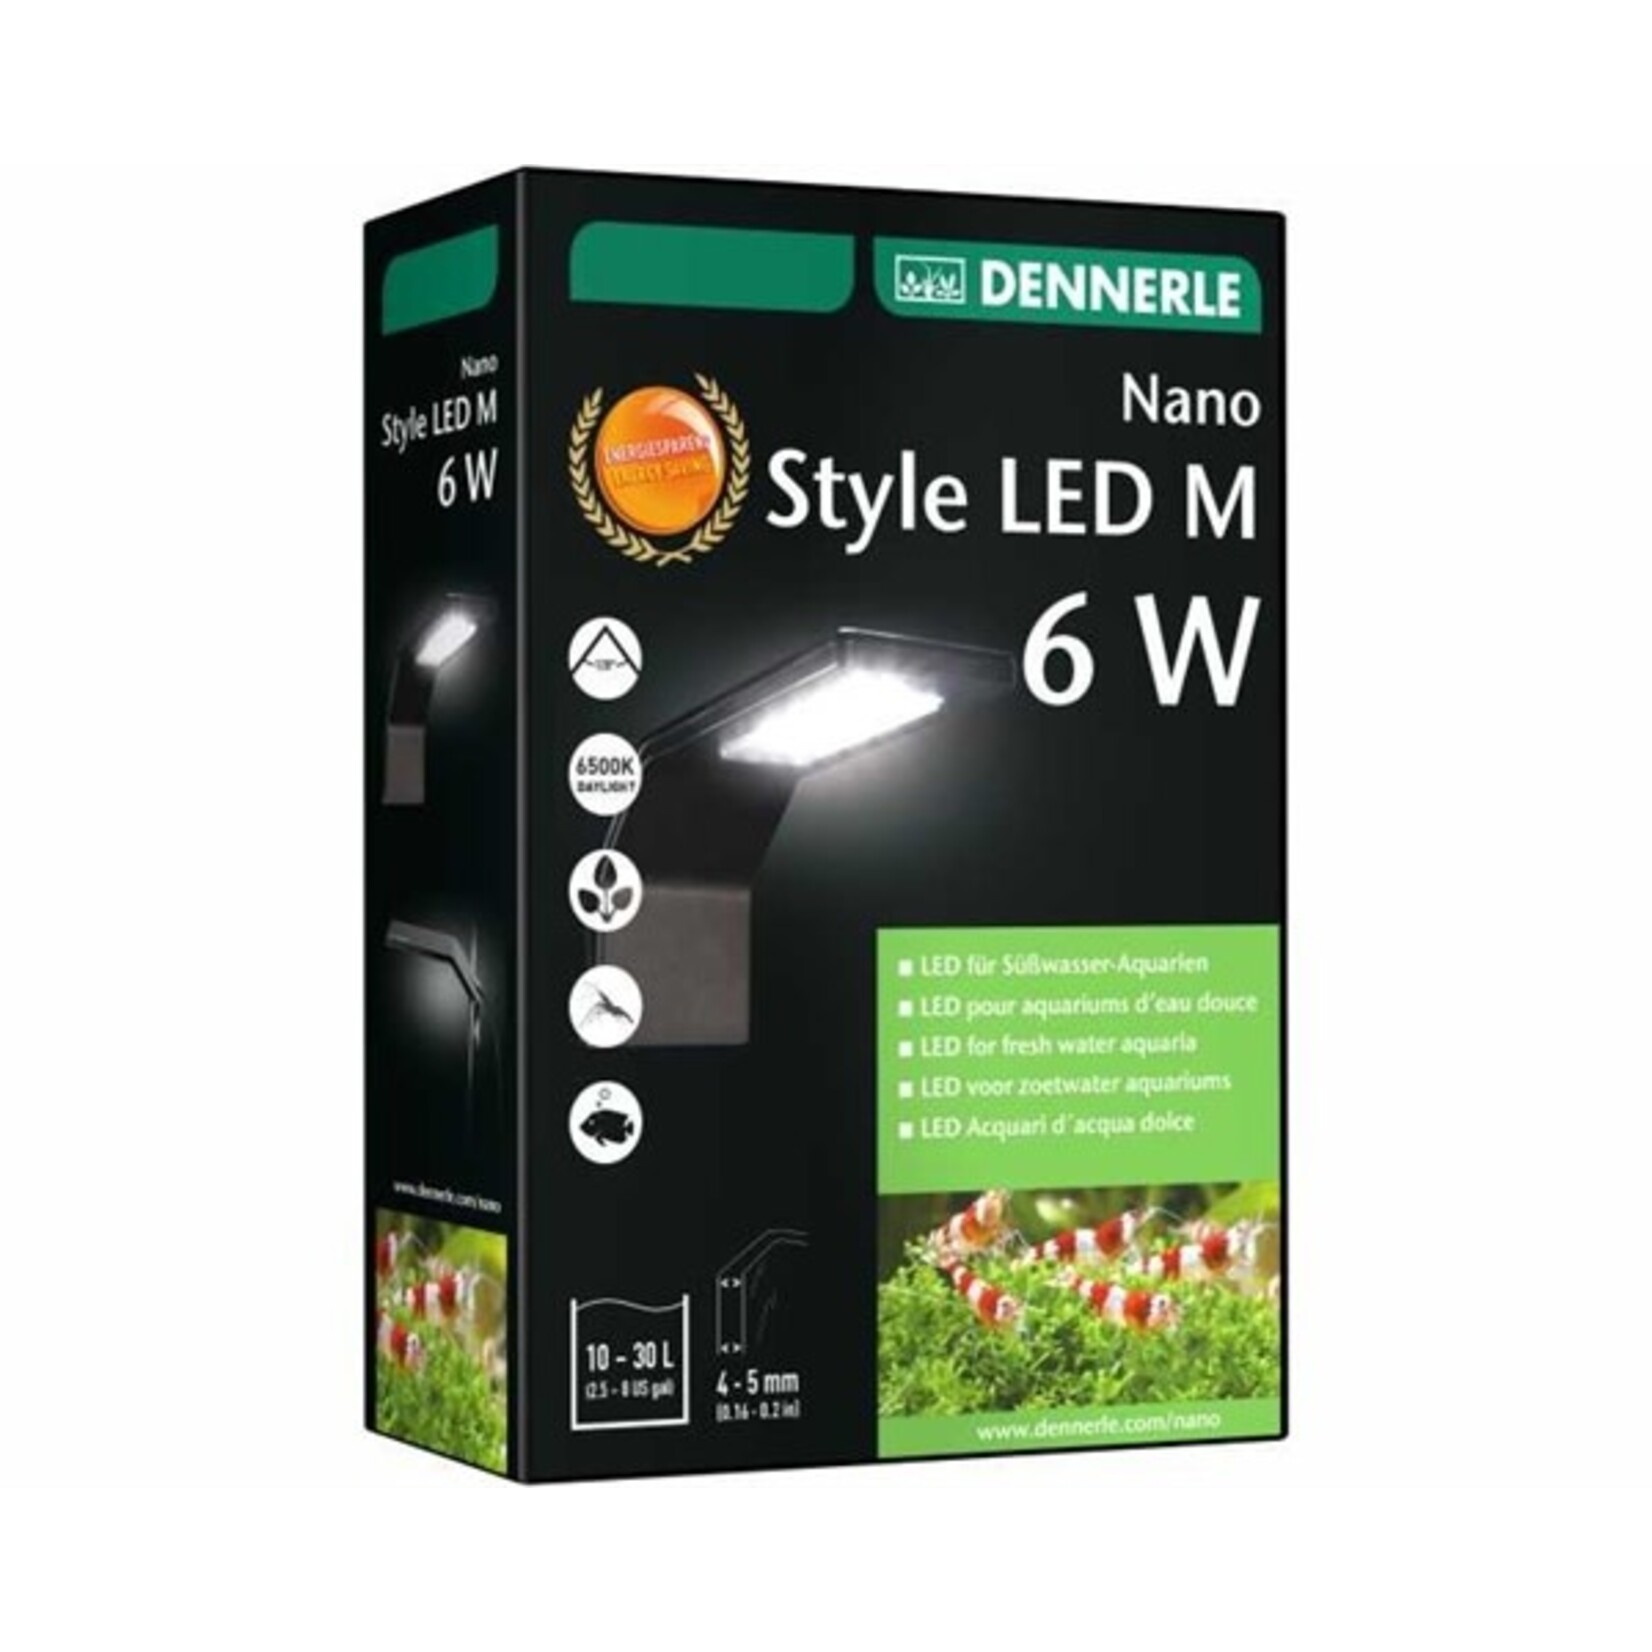 Dennerle Nano style LED m - 6 w